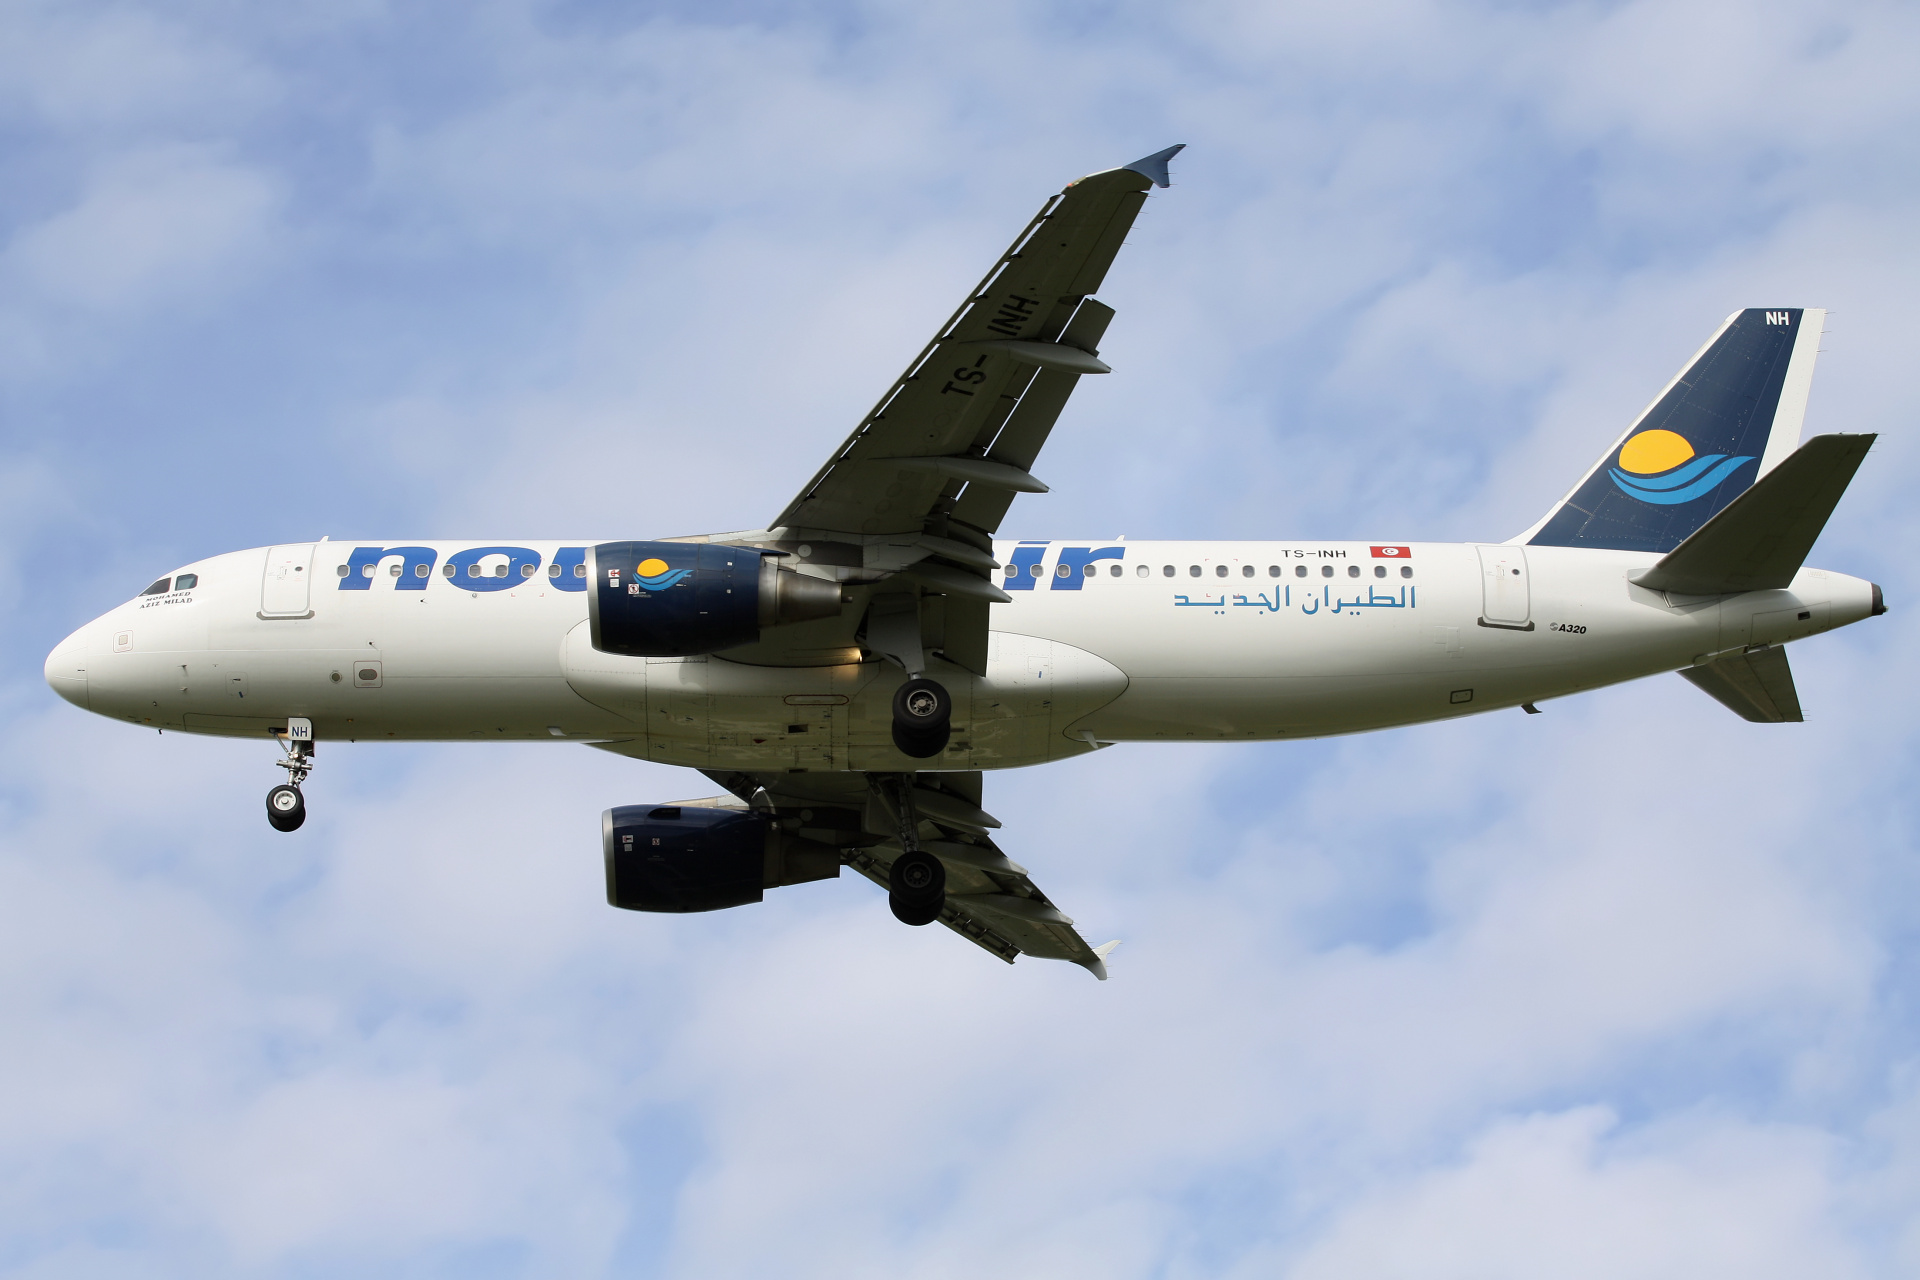 TS-INH (Aircraft » EPWA Spotting » Airbus A320-200 » Nouvelair)